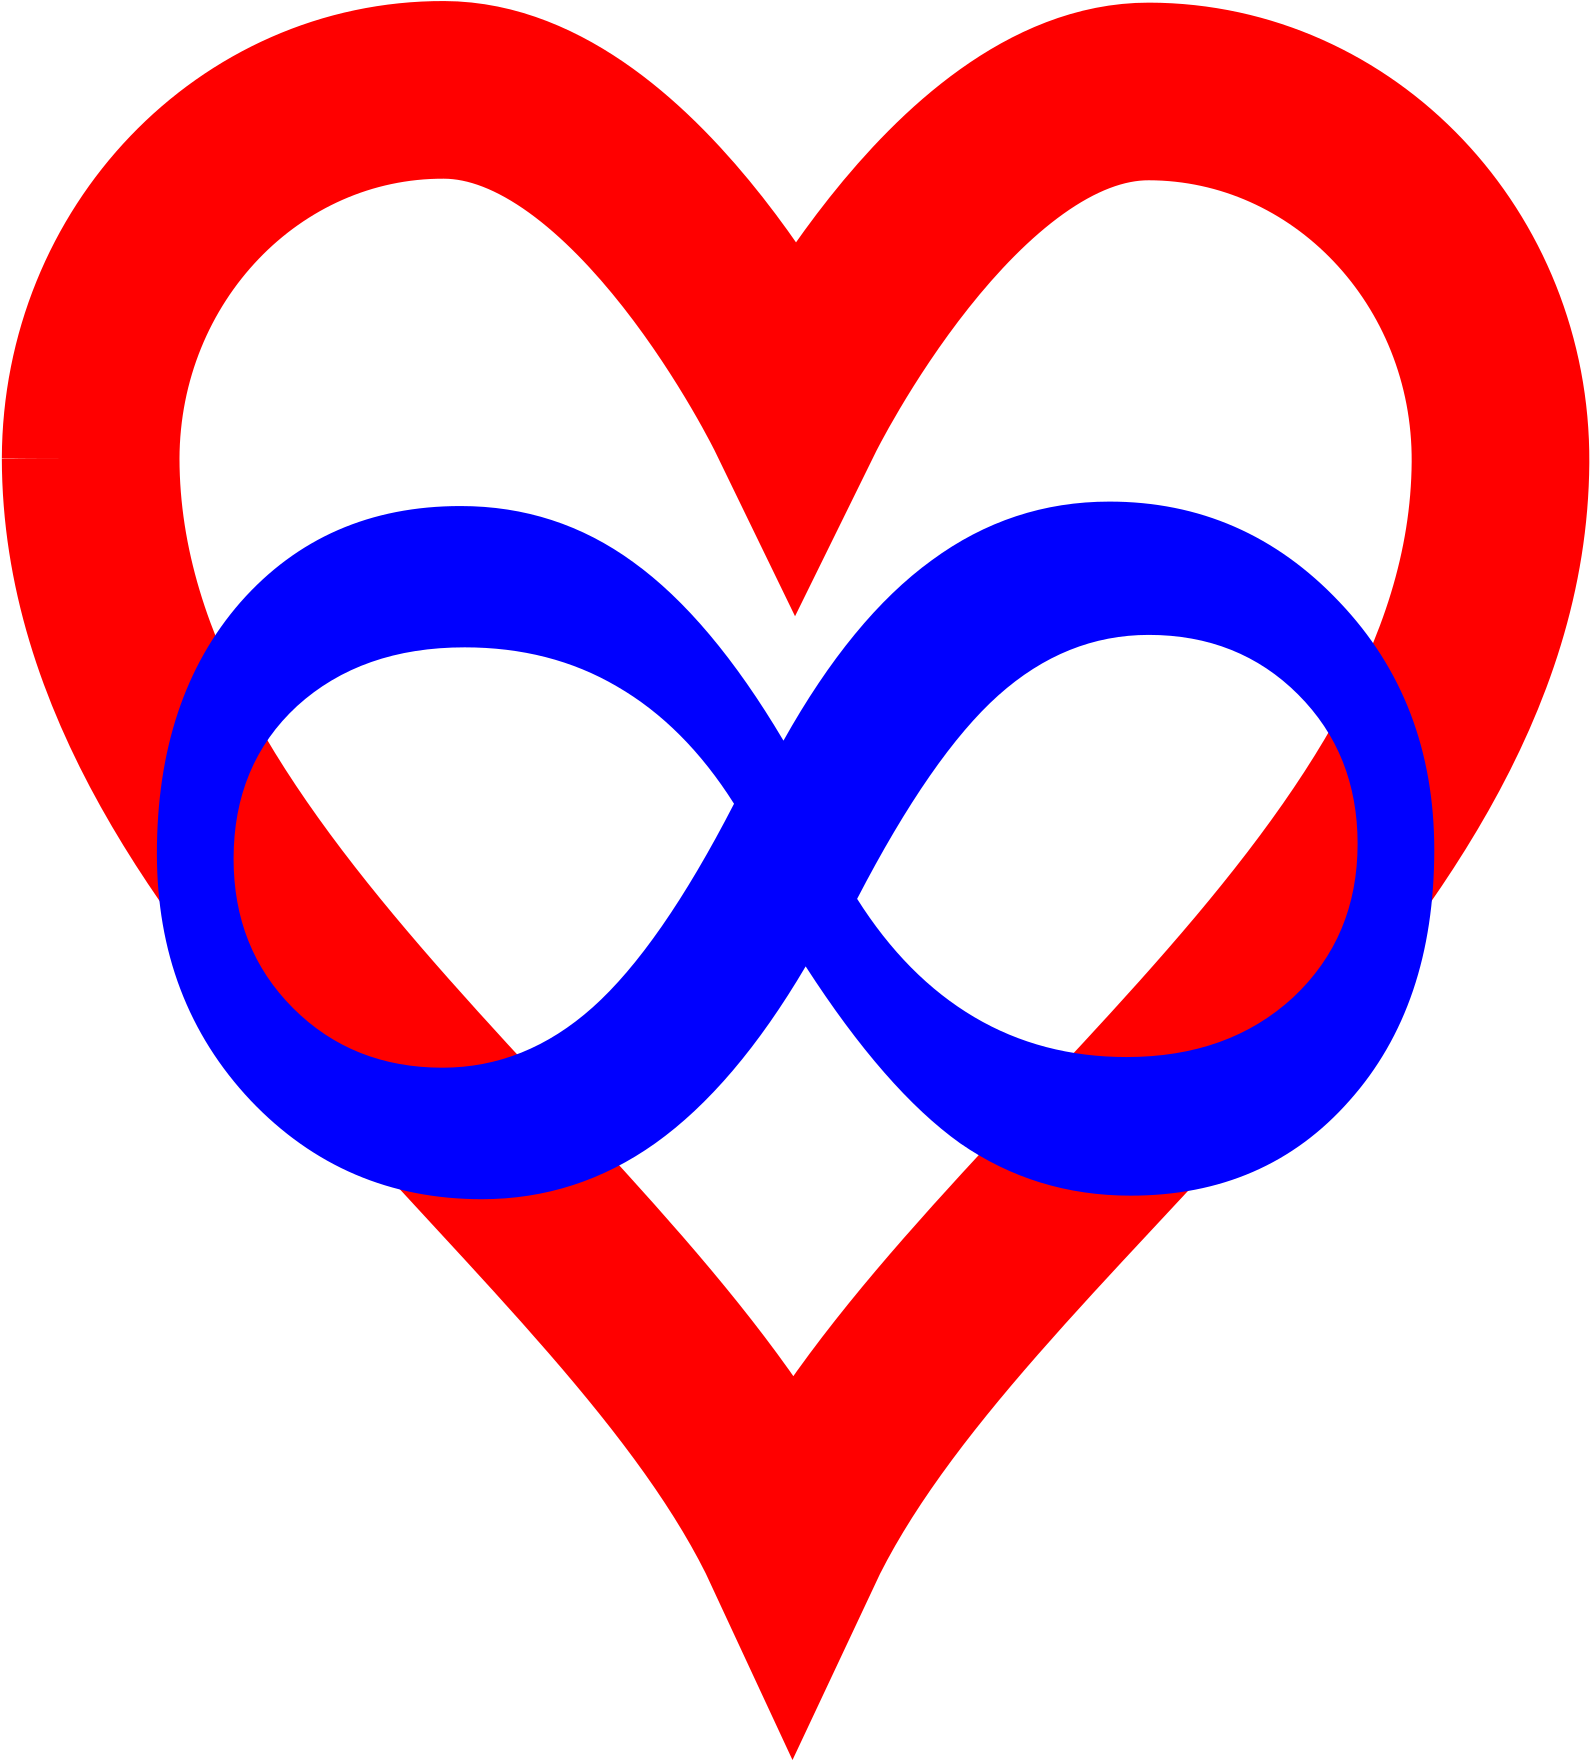 Infinity Heart Combination Graphic